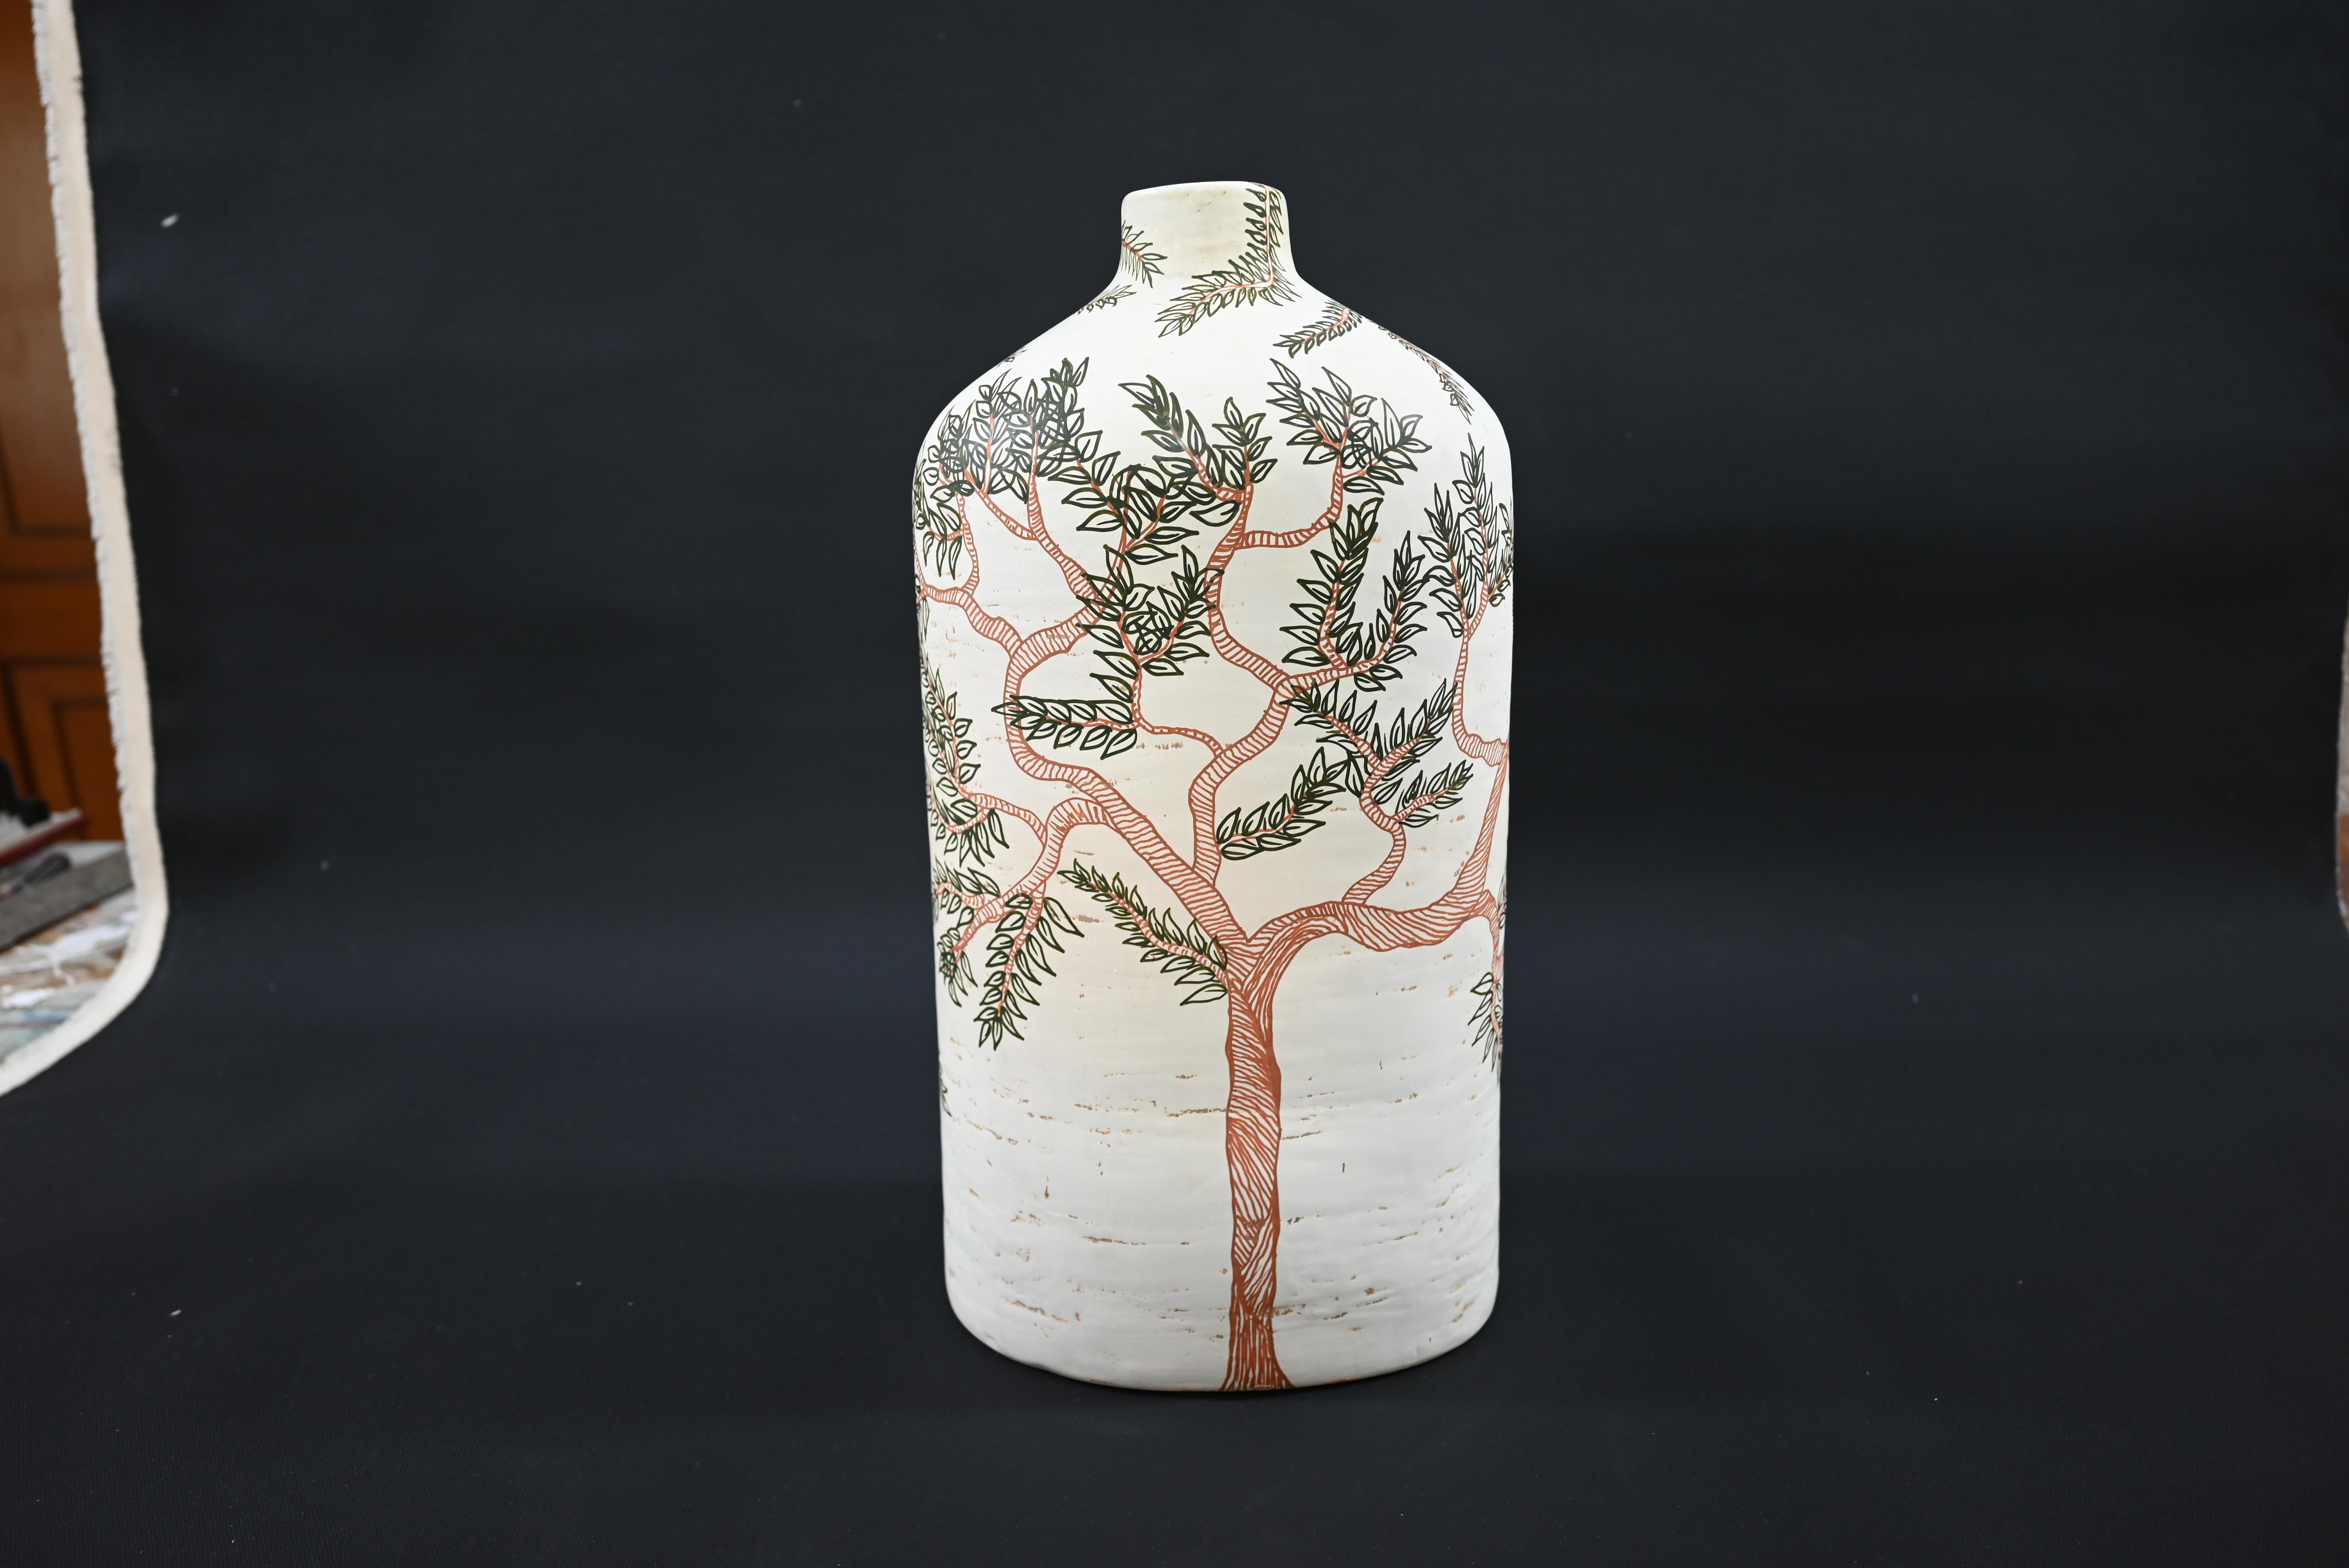 Art contemporain indien de Sumit Mehndiratta - Vase égyptien du printemps en vente 1